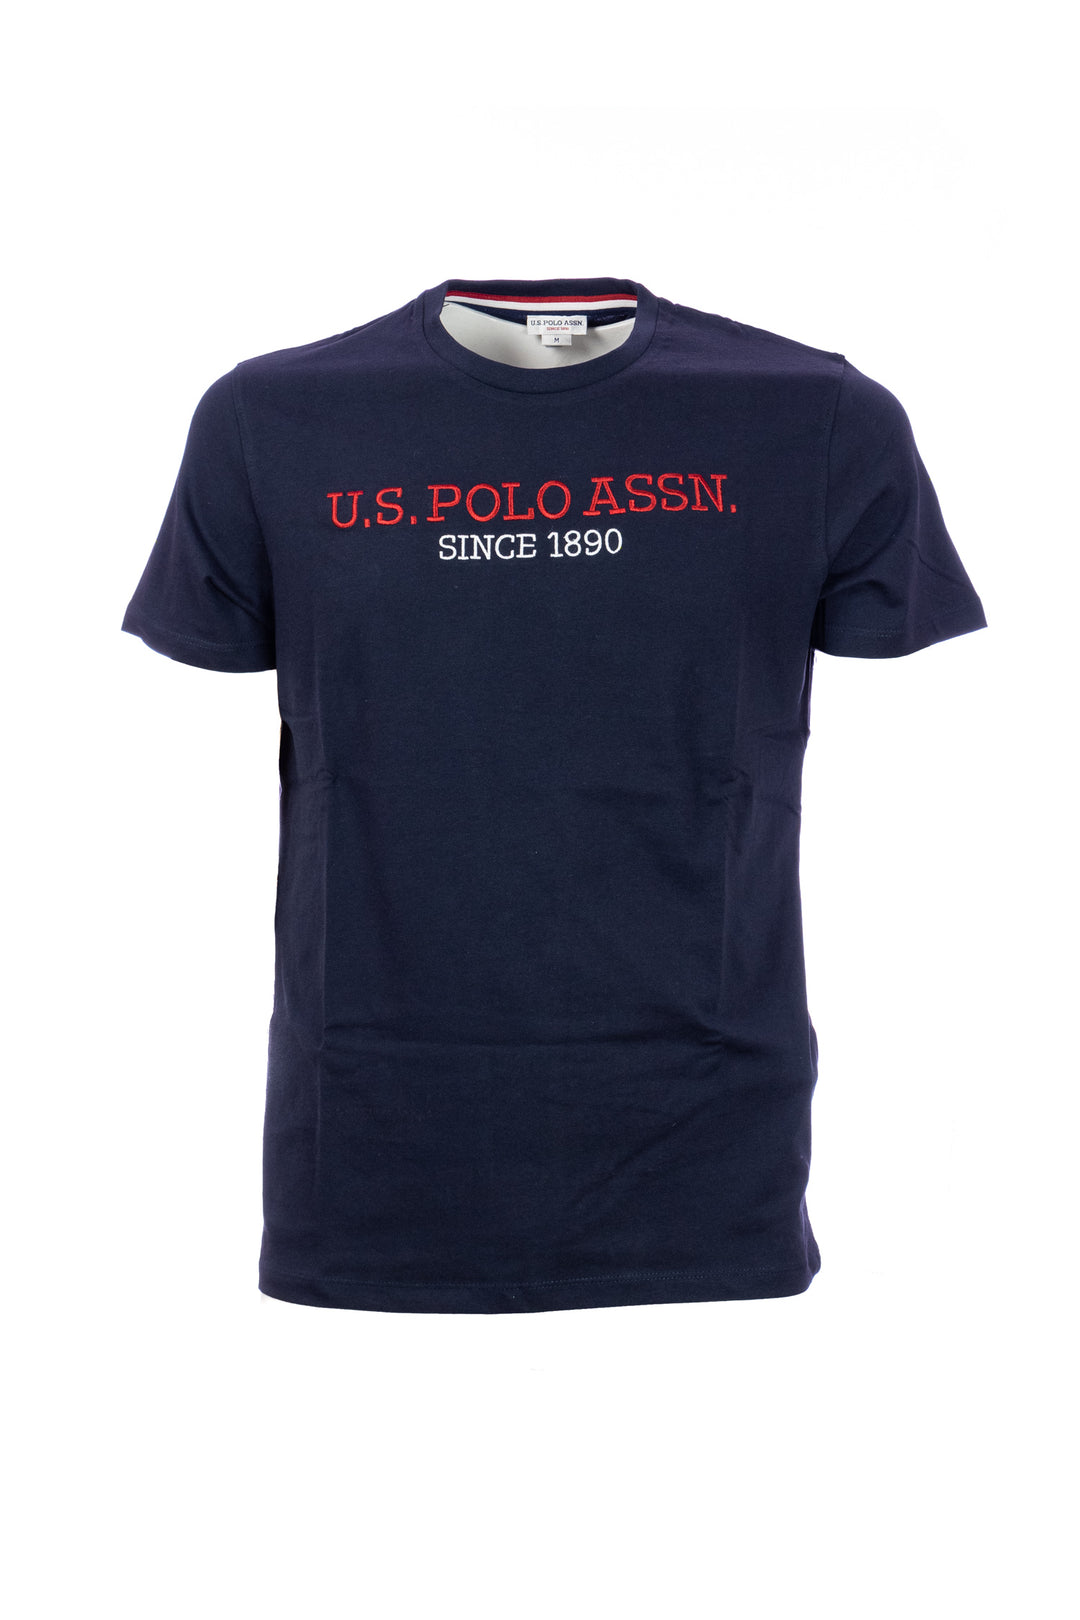 U.S. POLO ASSN. T-shirt blu navy in cotone con scritta U.S. Polo Assn. ricamato sul petto - Mancinelli 1954